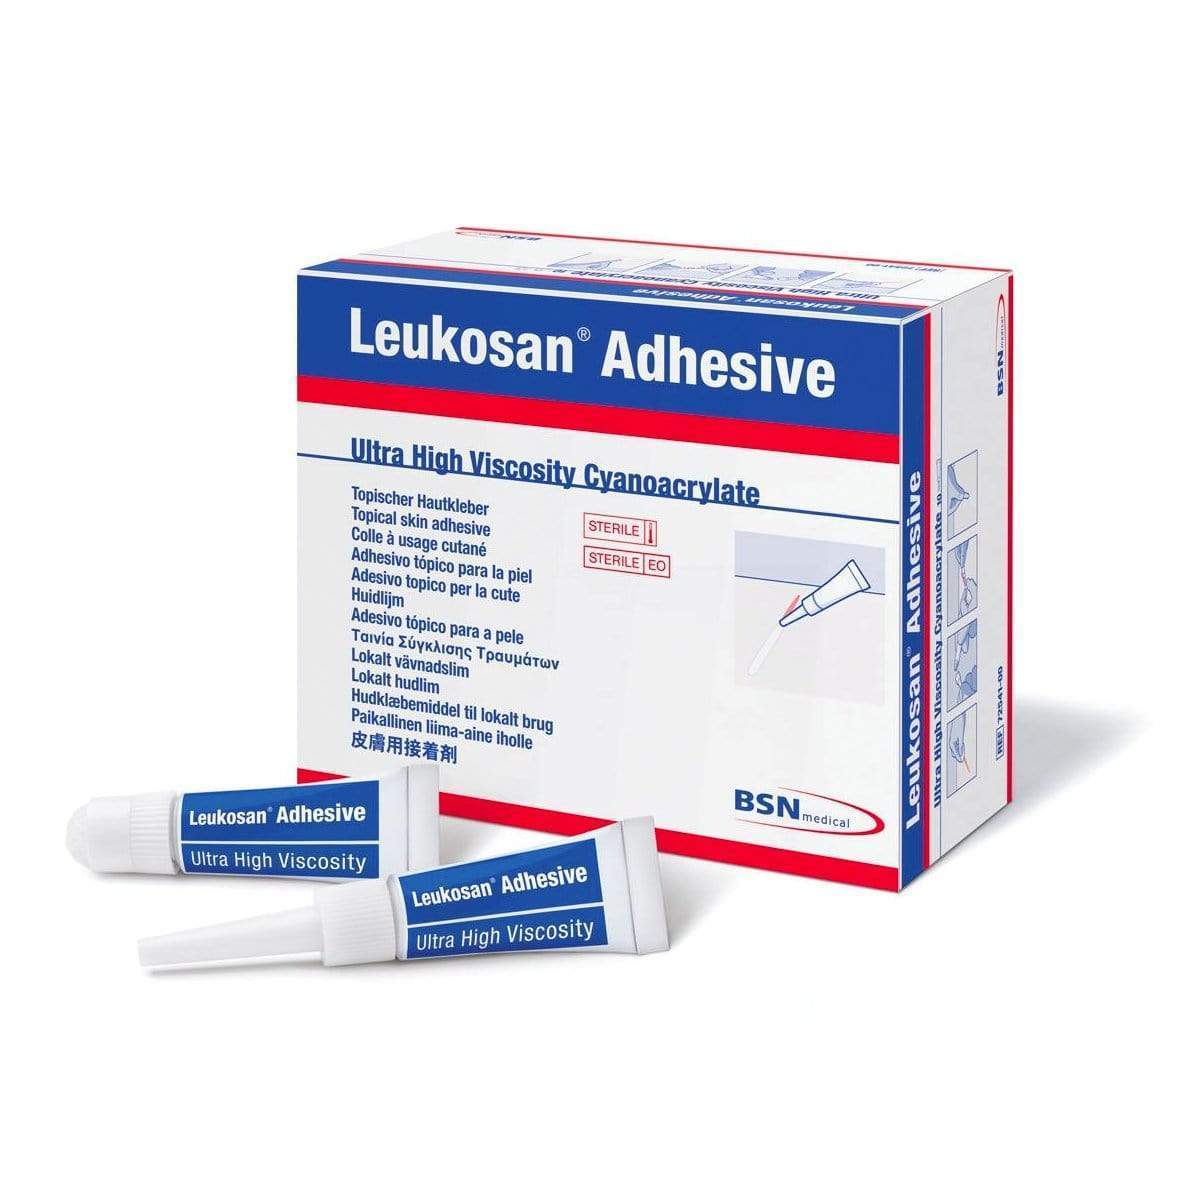 BSN Medical Leukosan Adhesive Glue